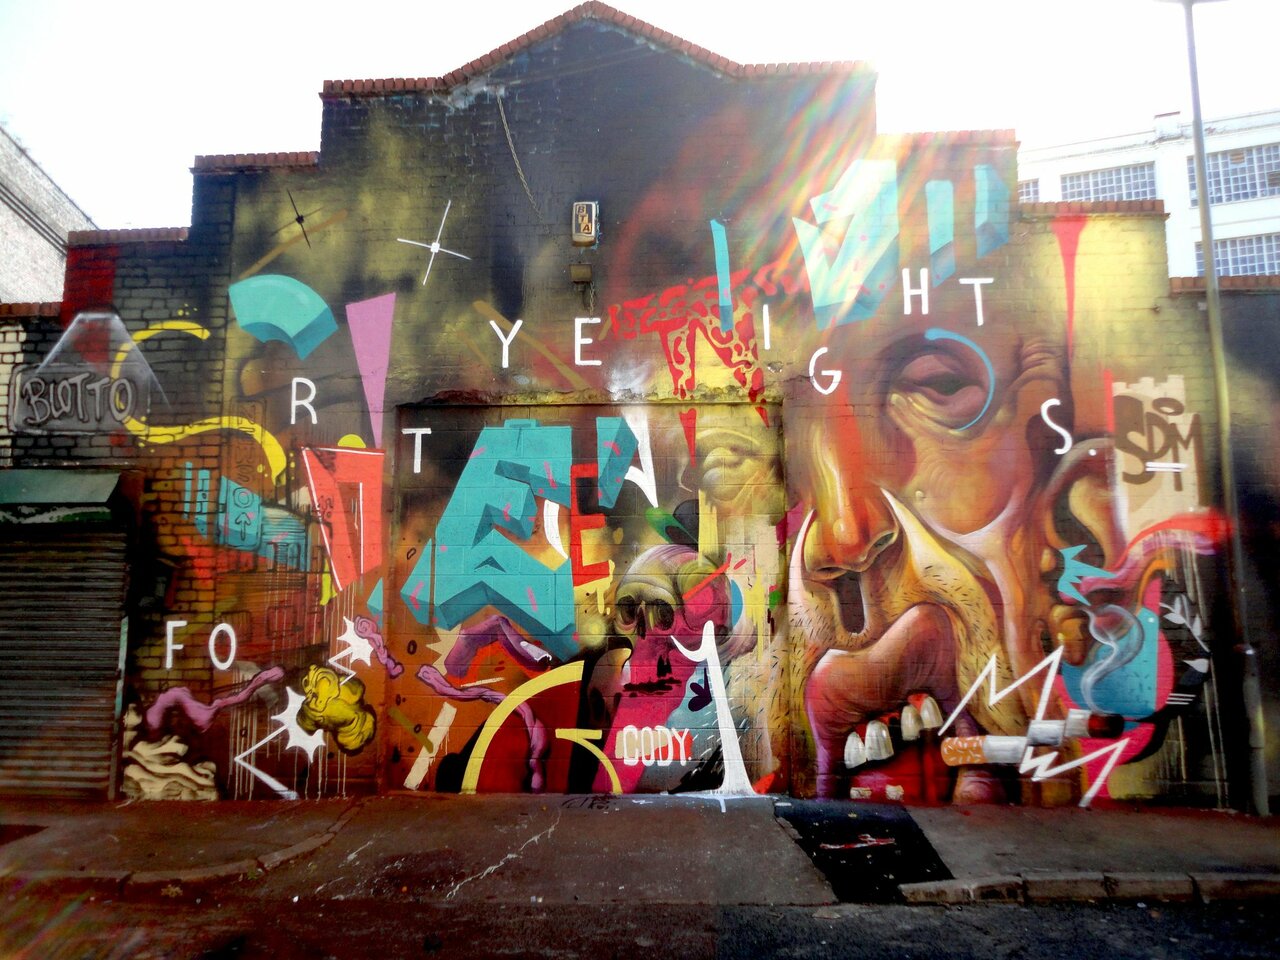 RT @djcolatron: @GENT48S & @dannewso have done it again. Amazing wall
#art #mural #graffiti #streetart #Digbeth http://t.co/Kc0OBct1JU